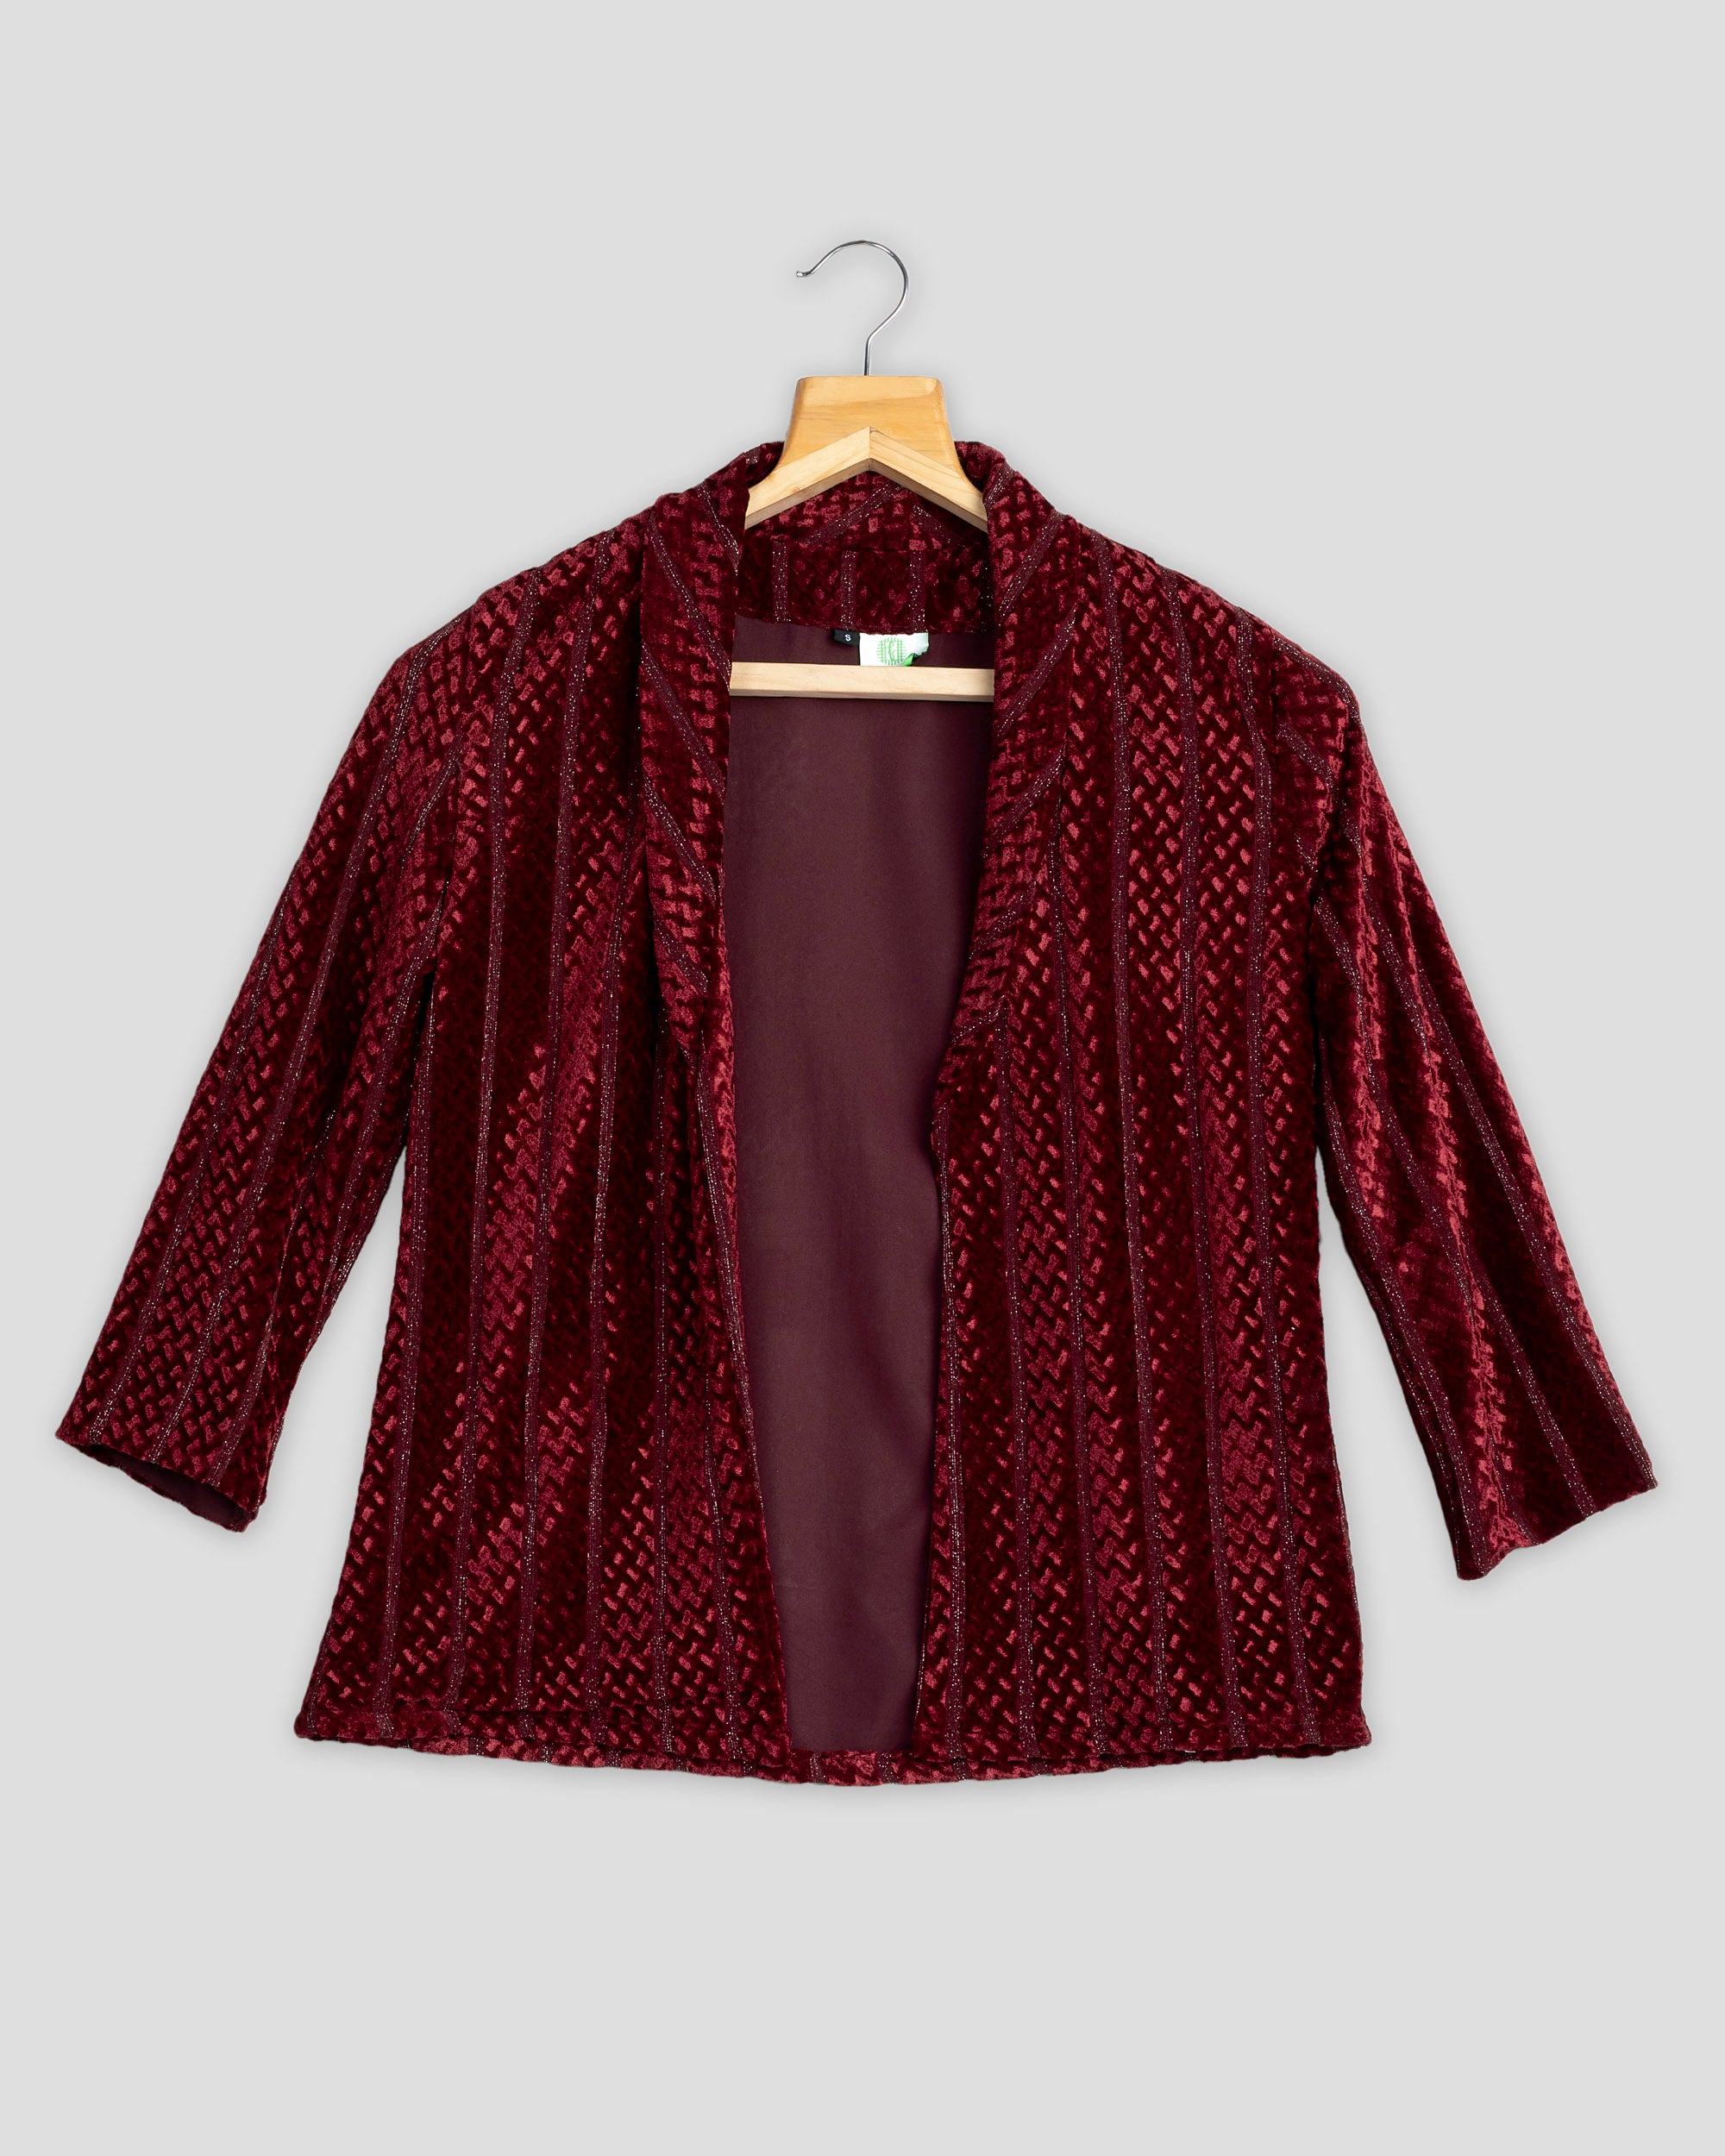 Buy Black Jackets & Coats for Women by BUYNEWTREND Online | Ajio.com